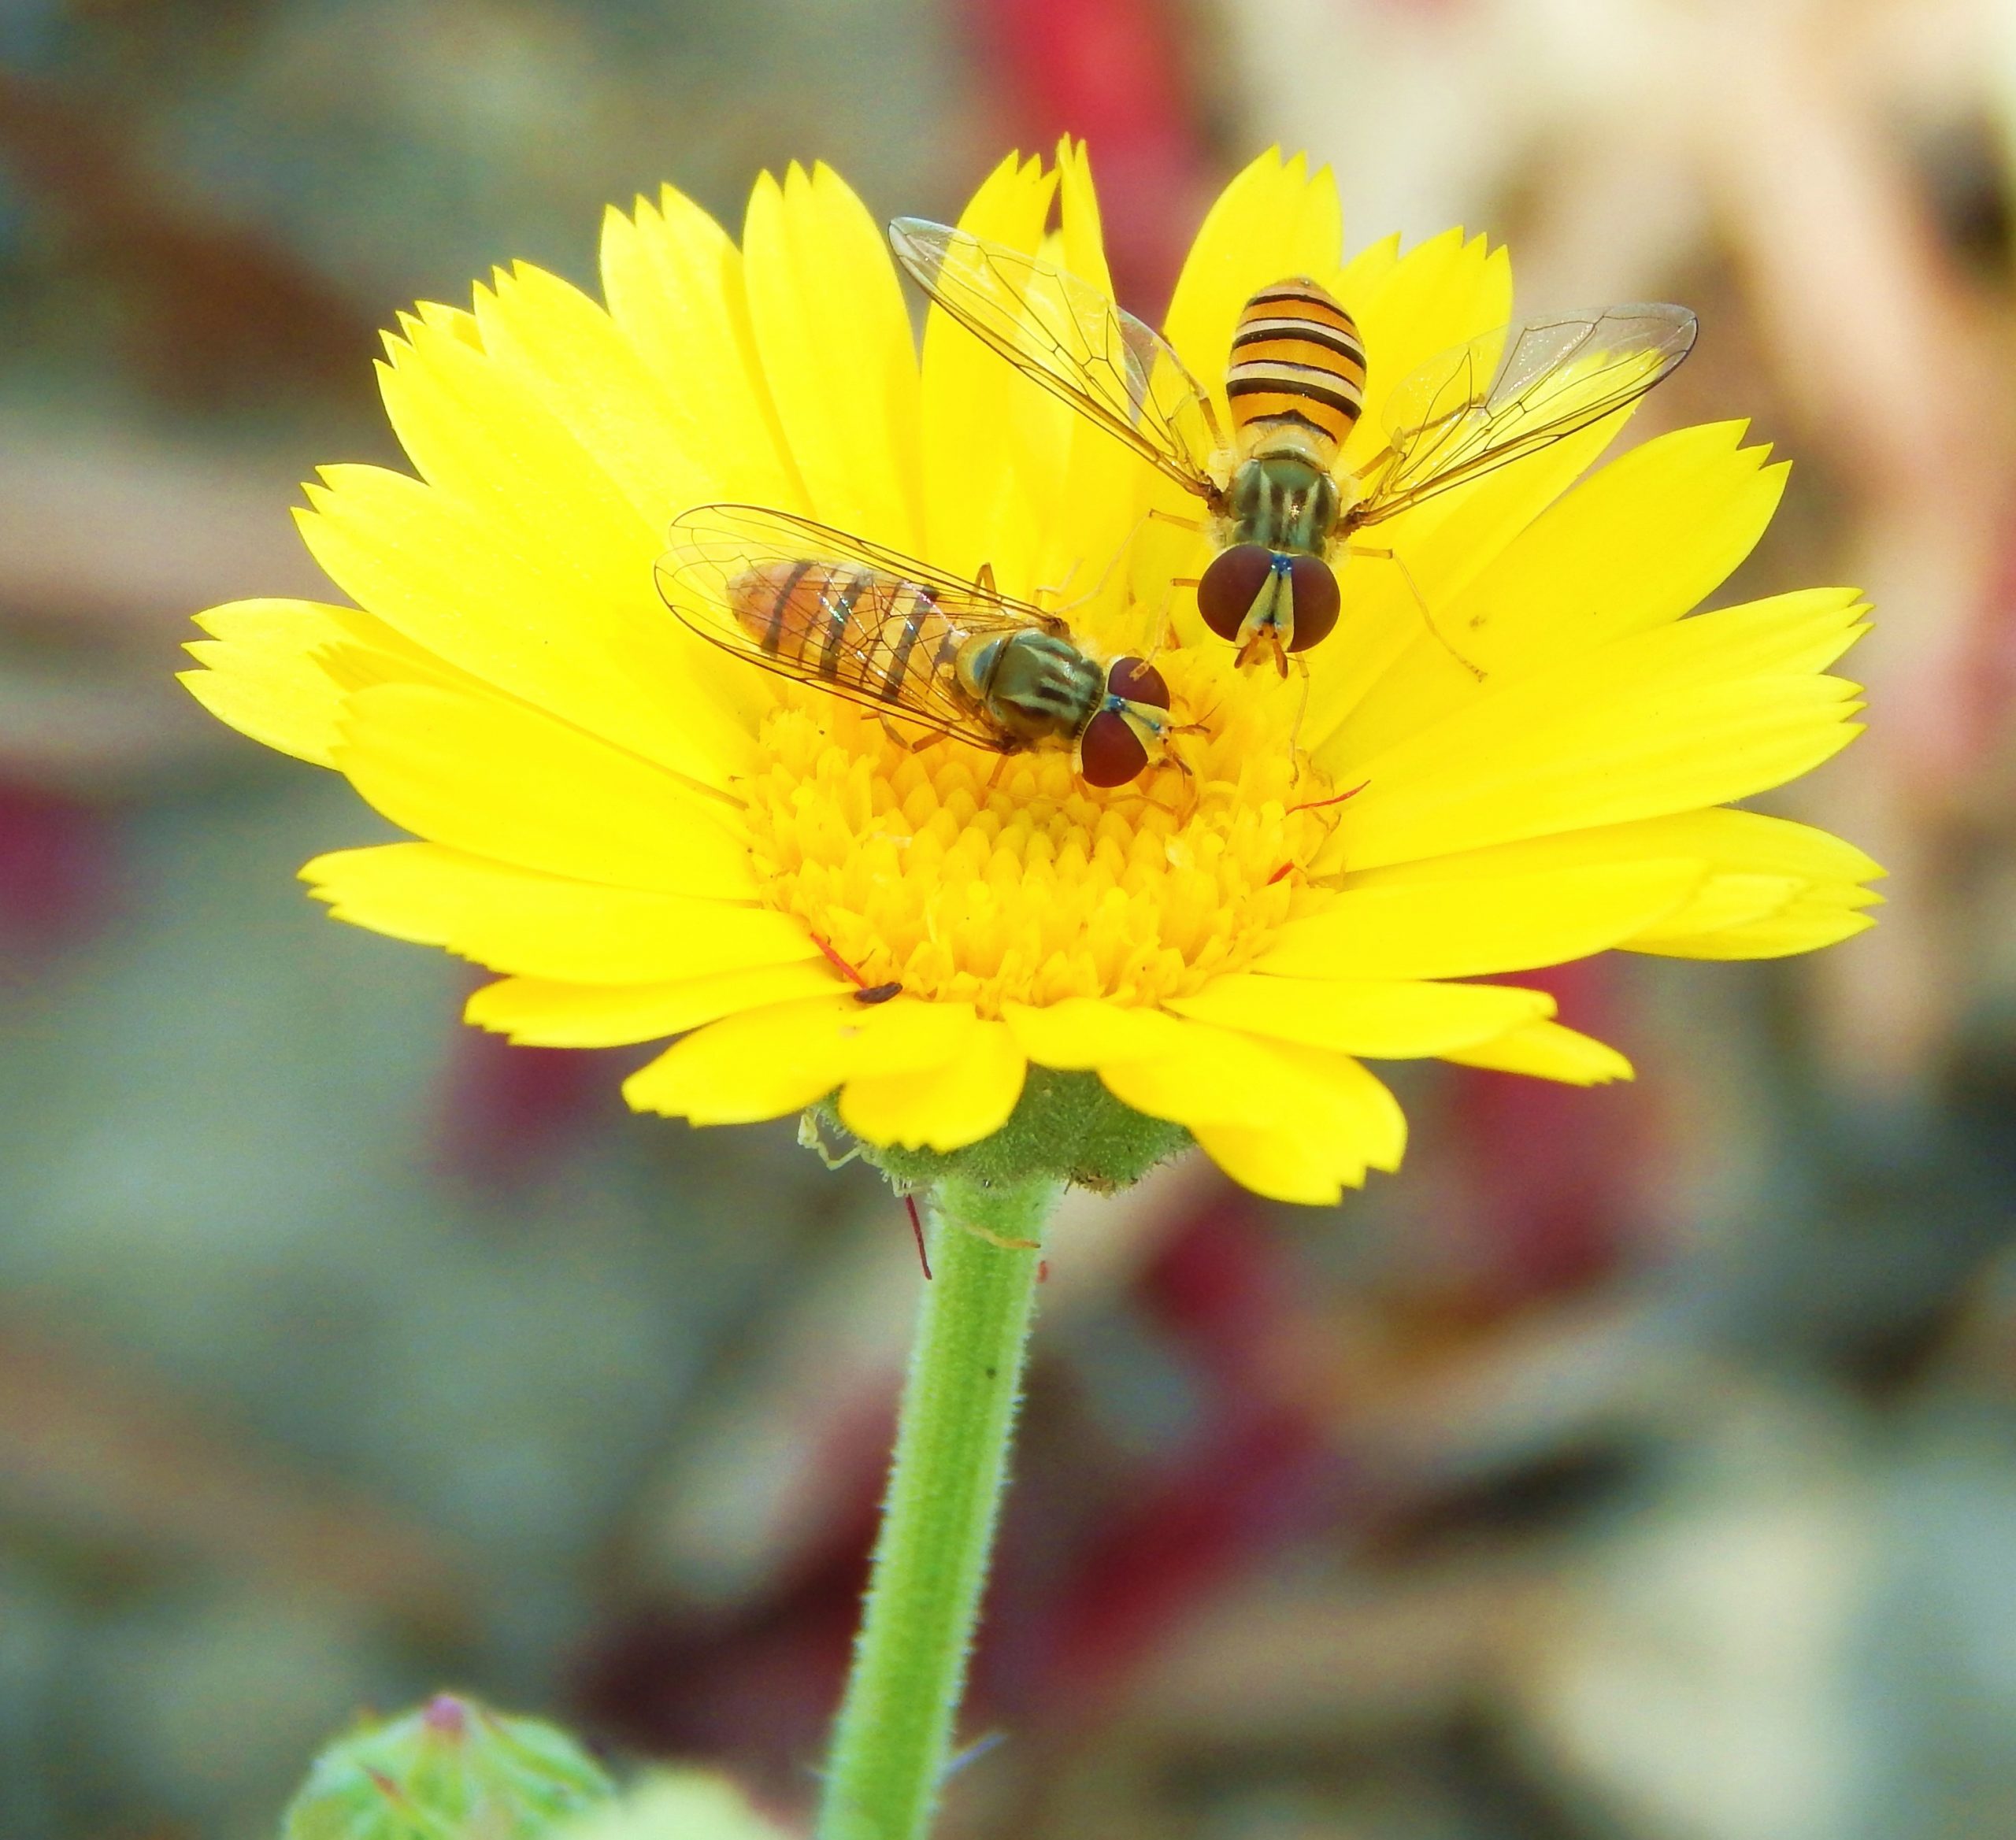 Honey bees on yellow flower